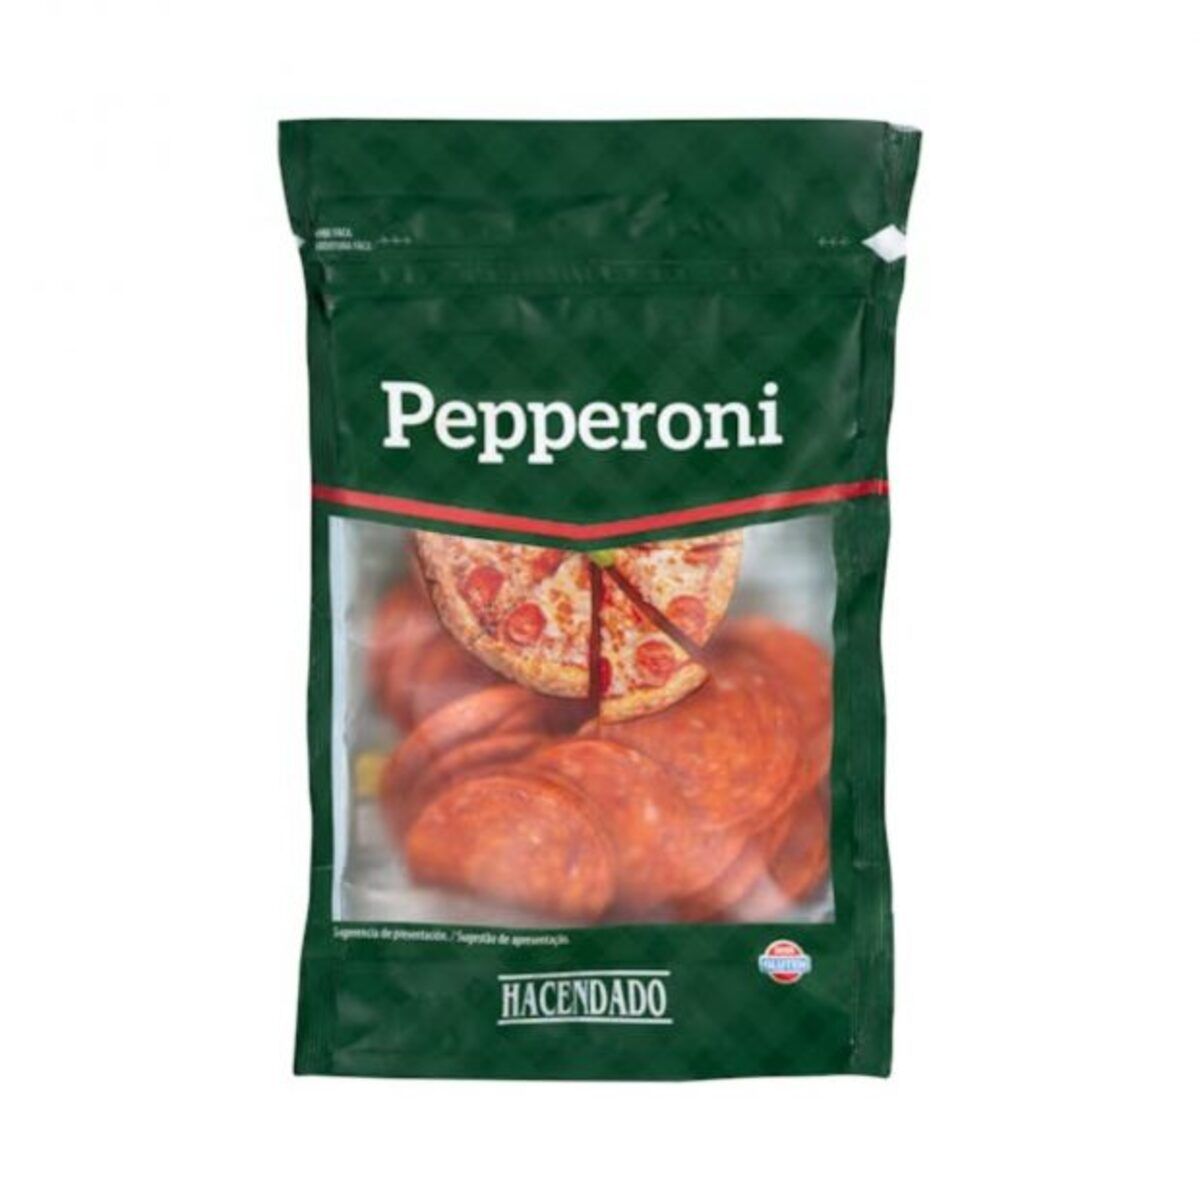 Bolsa de pepperoni de Mercadona.